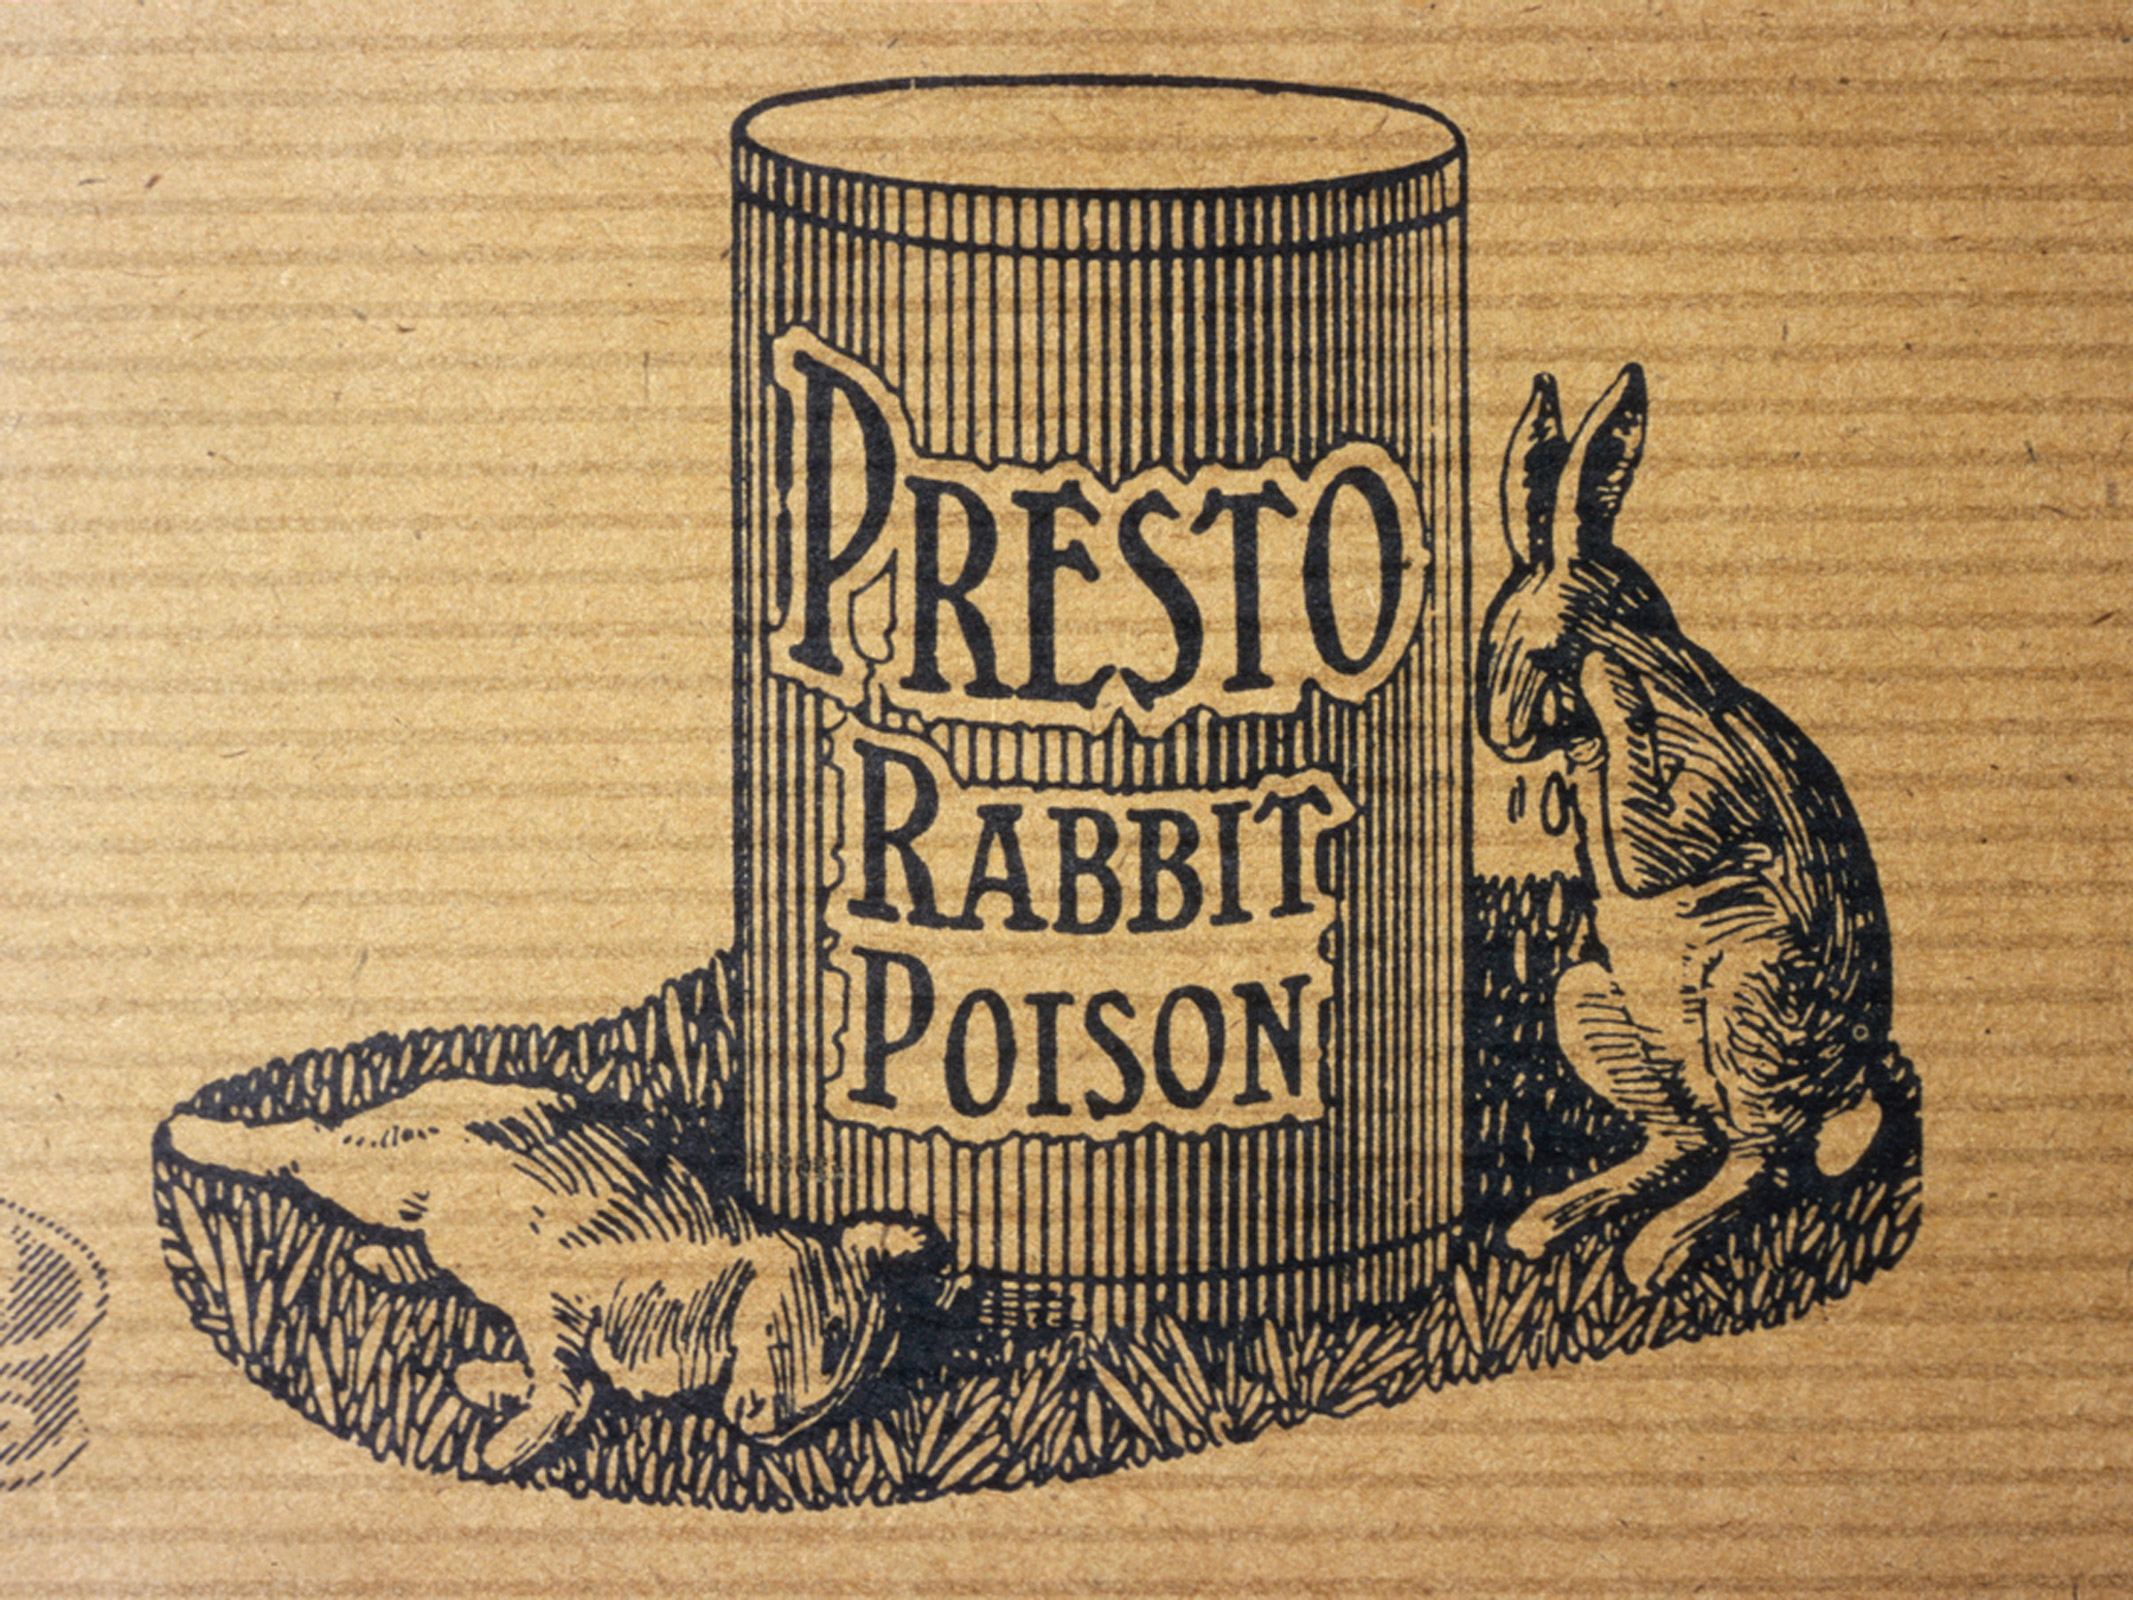 Advertisement for Presto Rabbit Poison